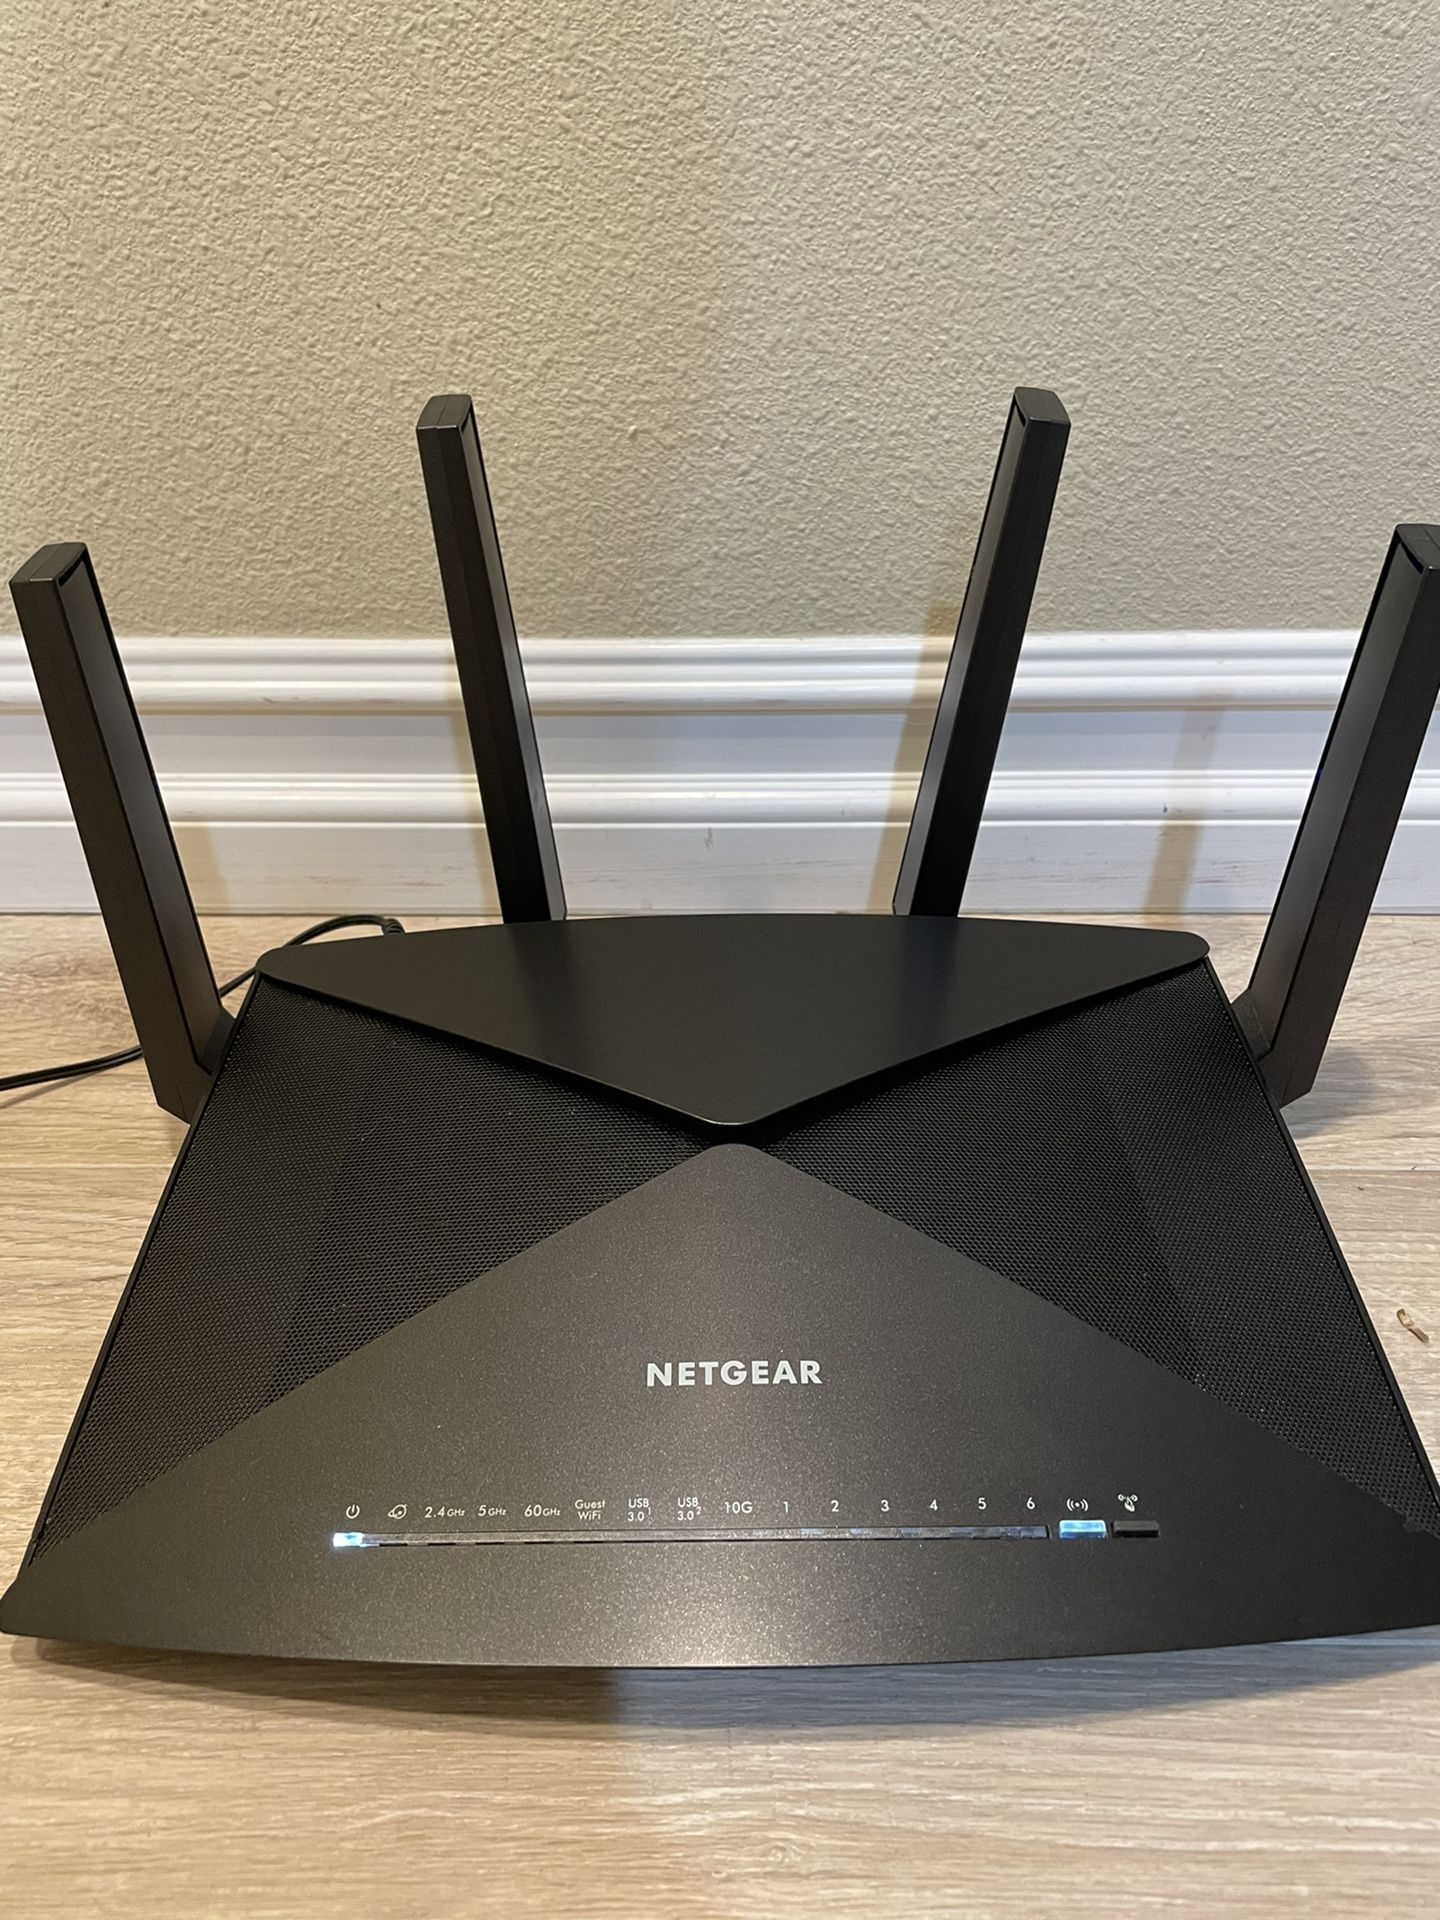 Netgear Nighthawk X10 AD7200 R9000 Smart WiFi Router